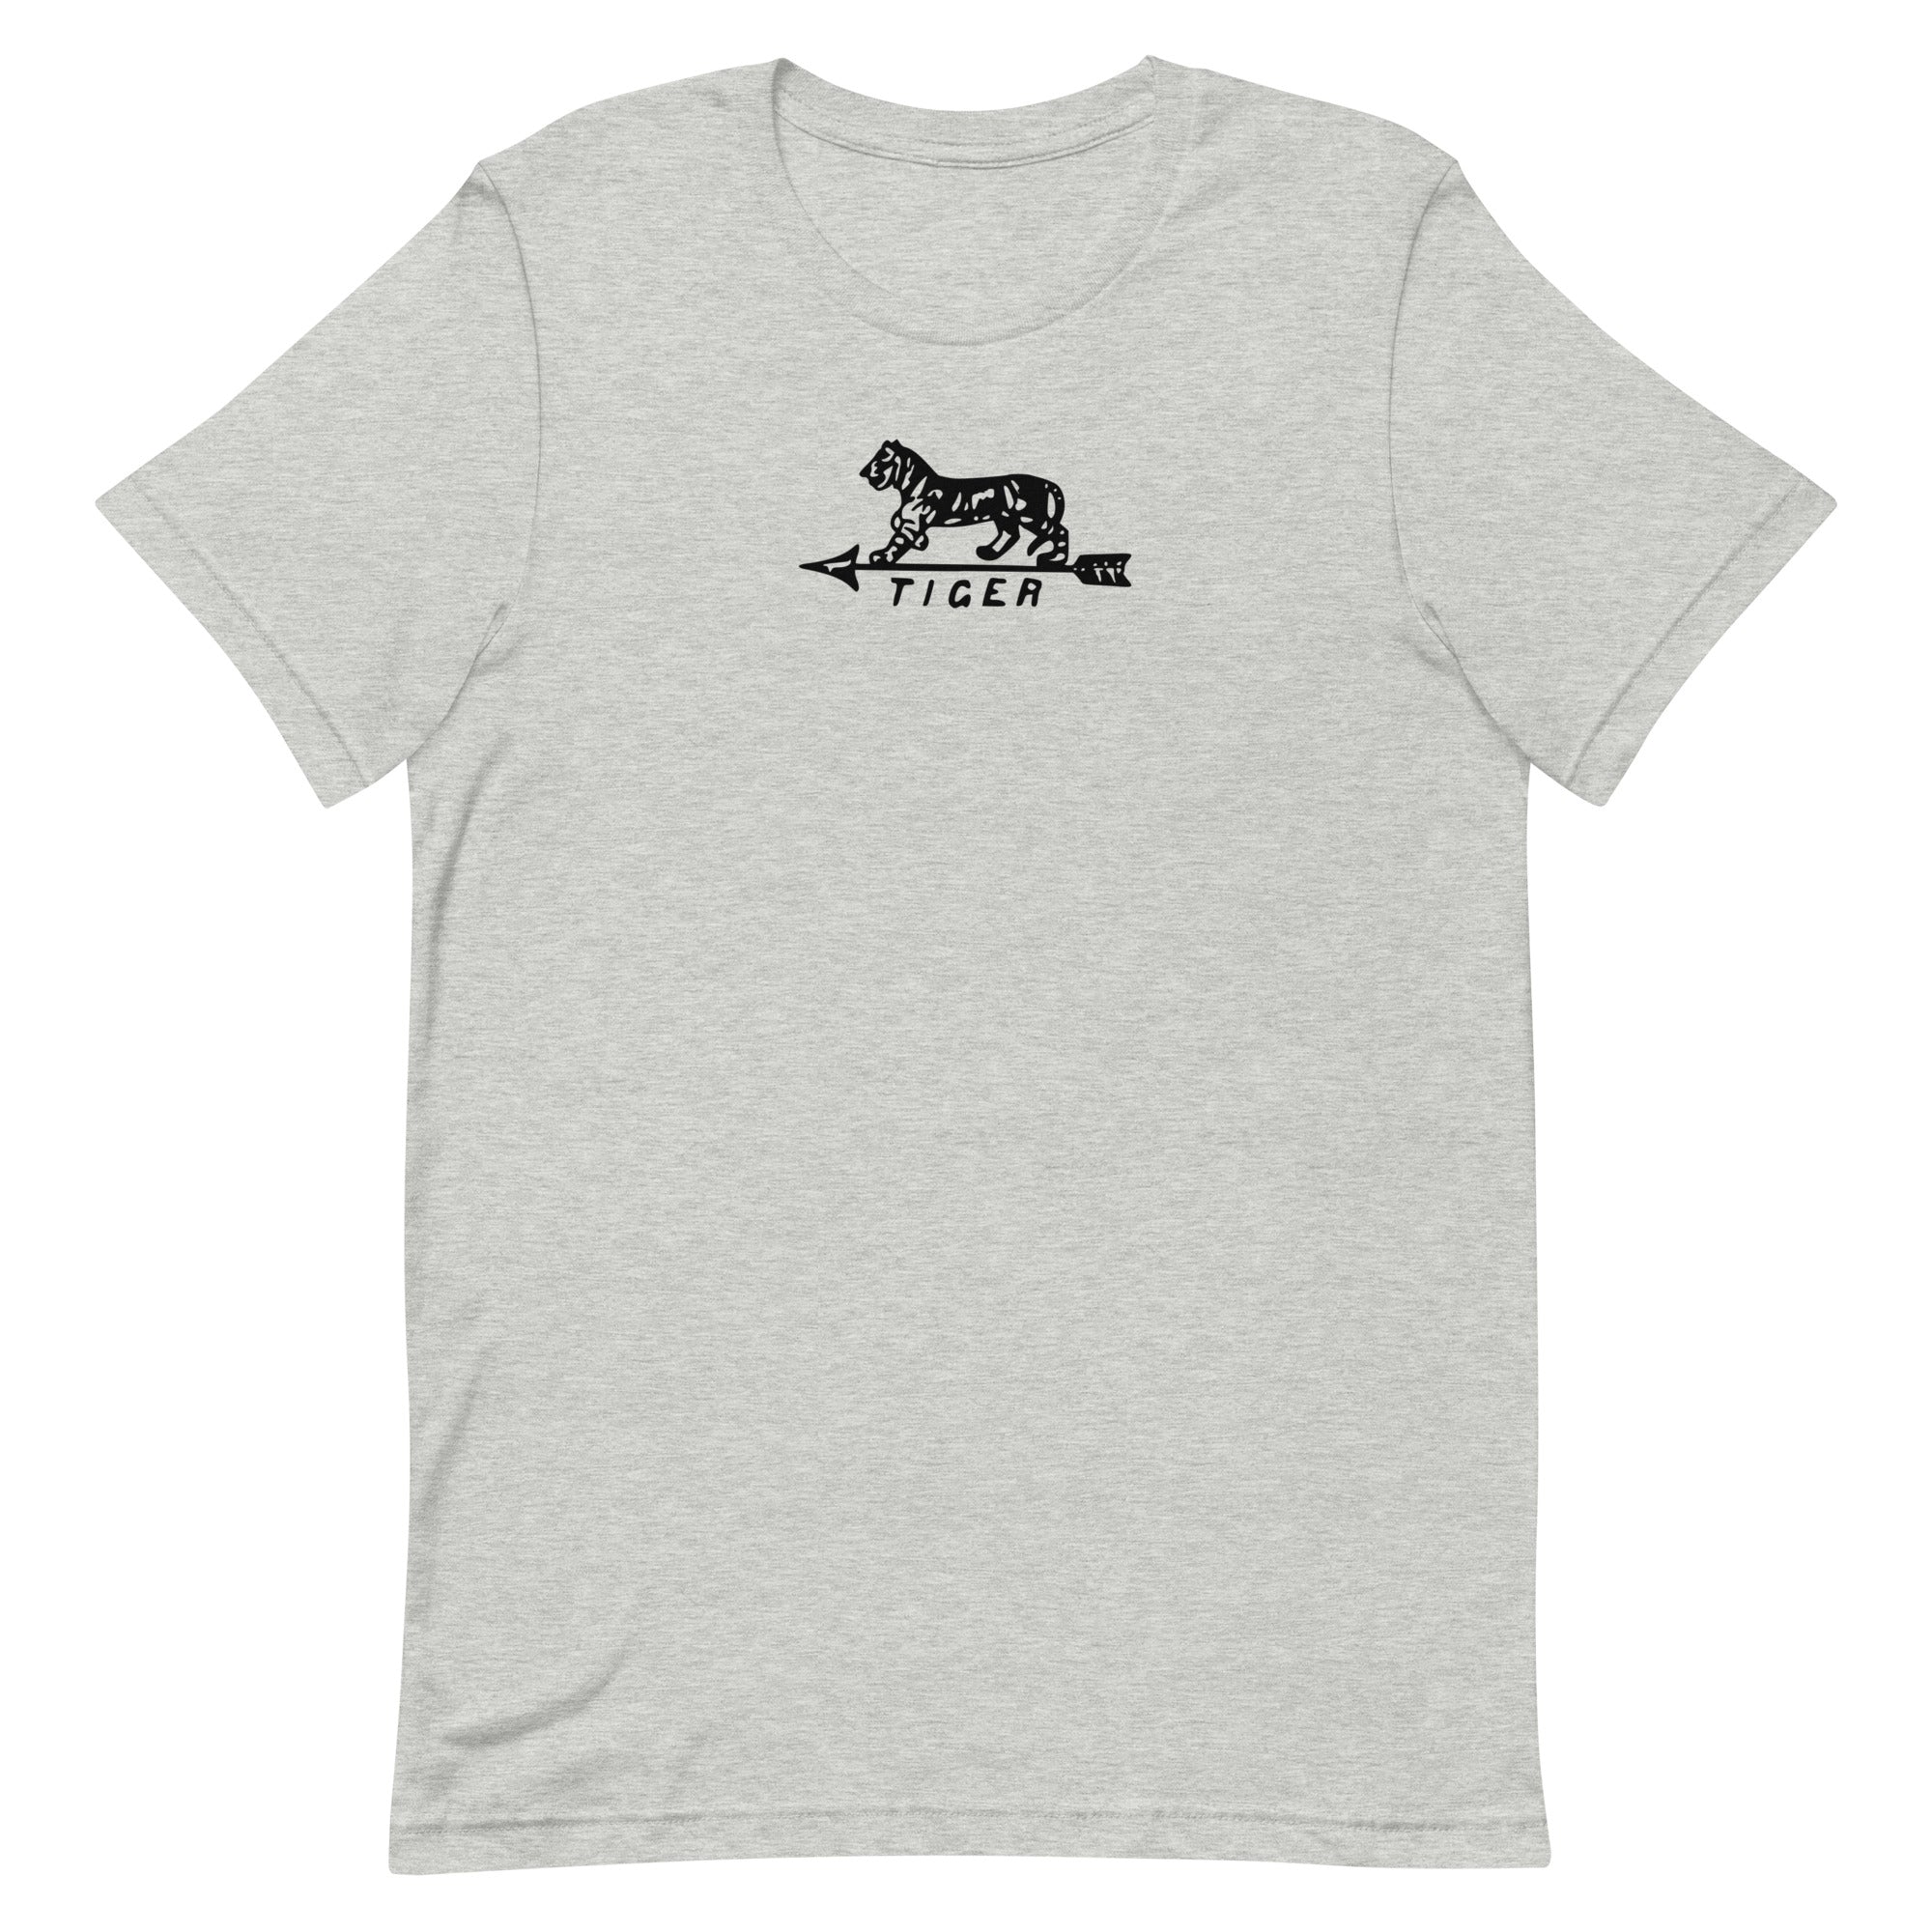 Unisex t-shirt - Tiger Rawrr